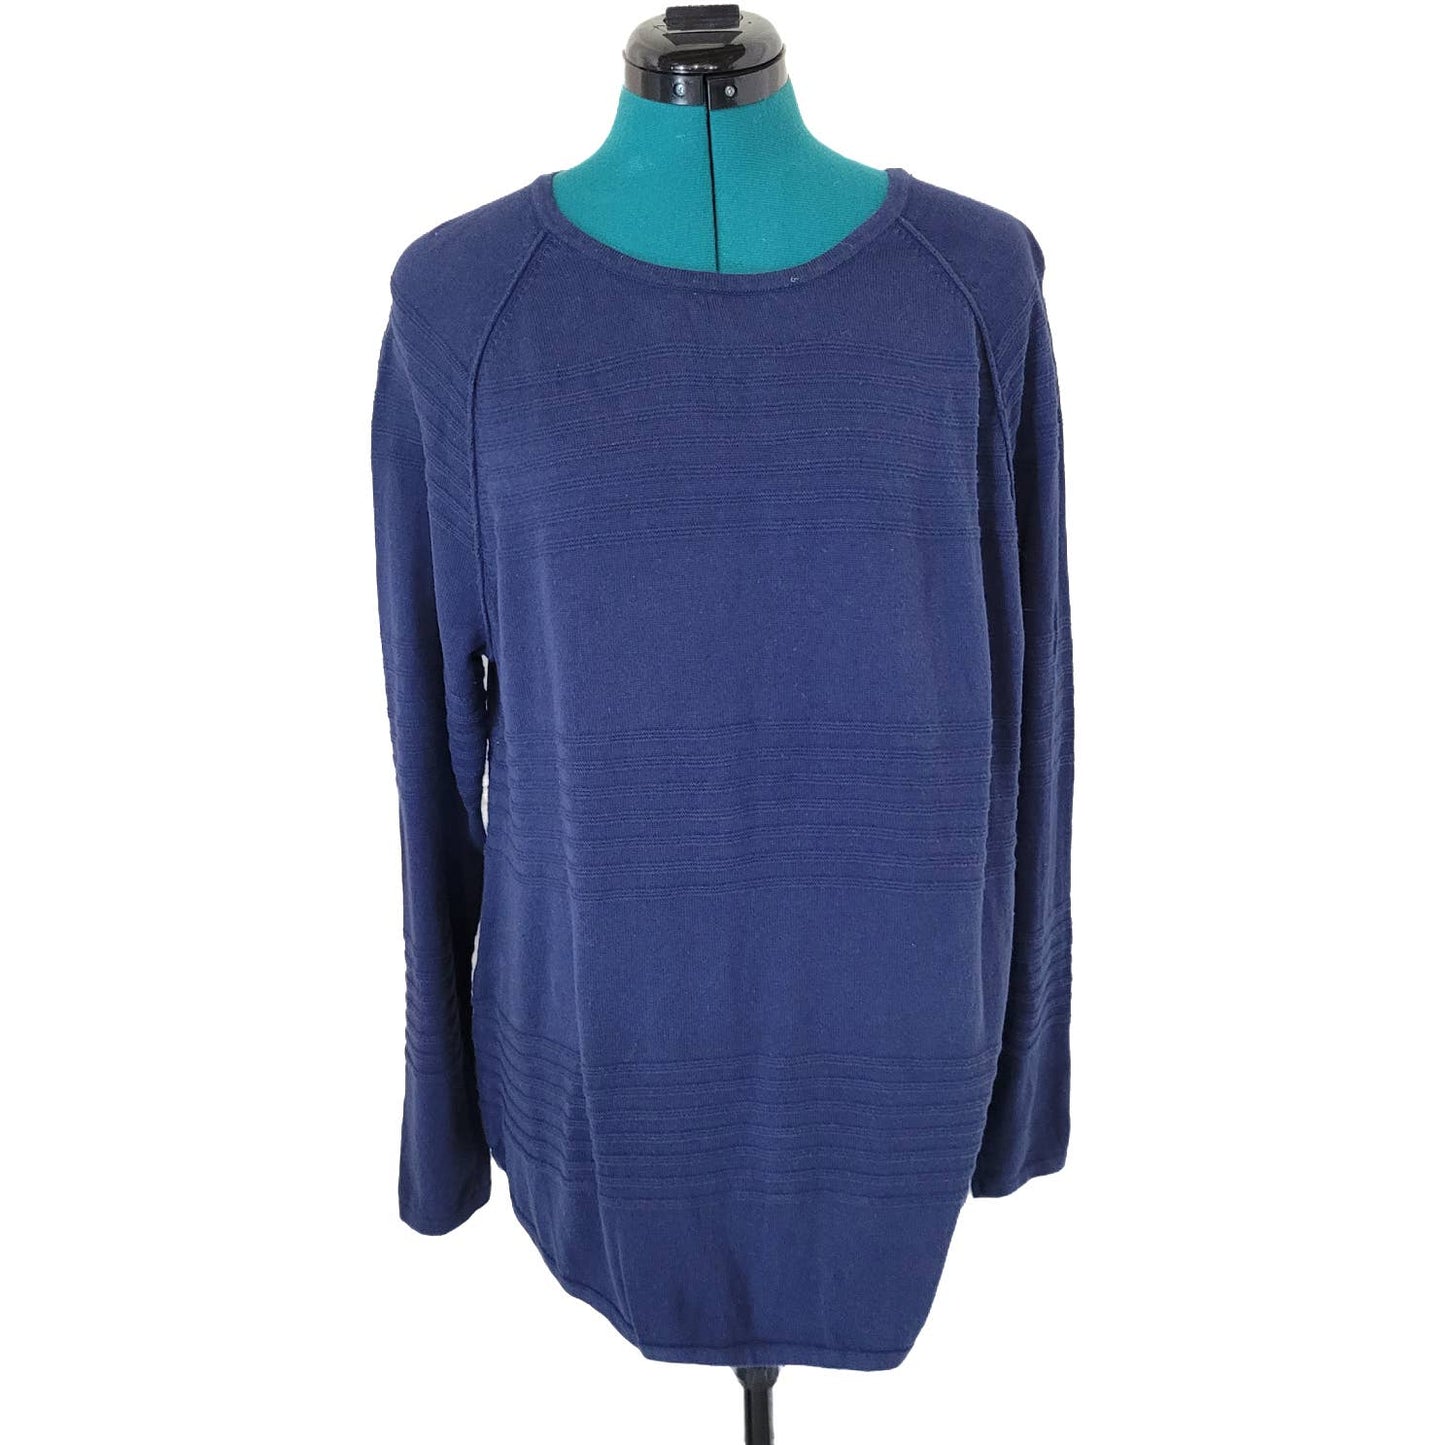 Karen Scott Navy Blue Ribbed Sweater - Size LargeMarkita's ClosetKaren Scott